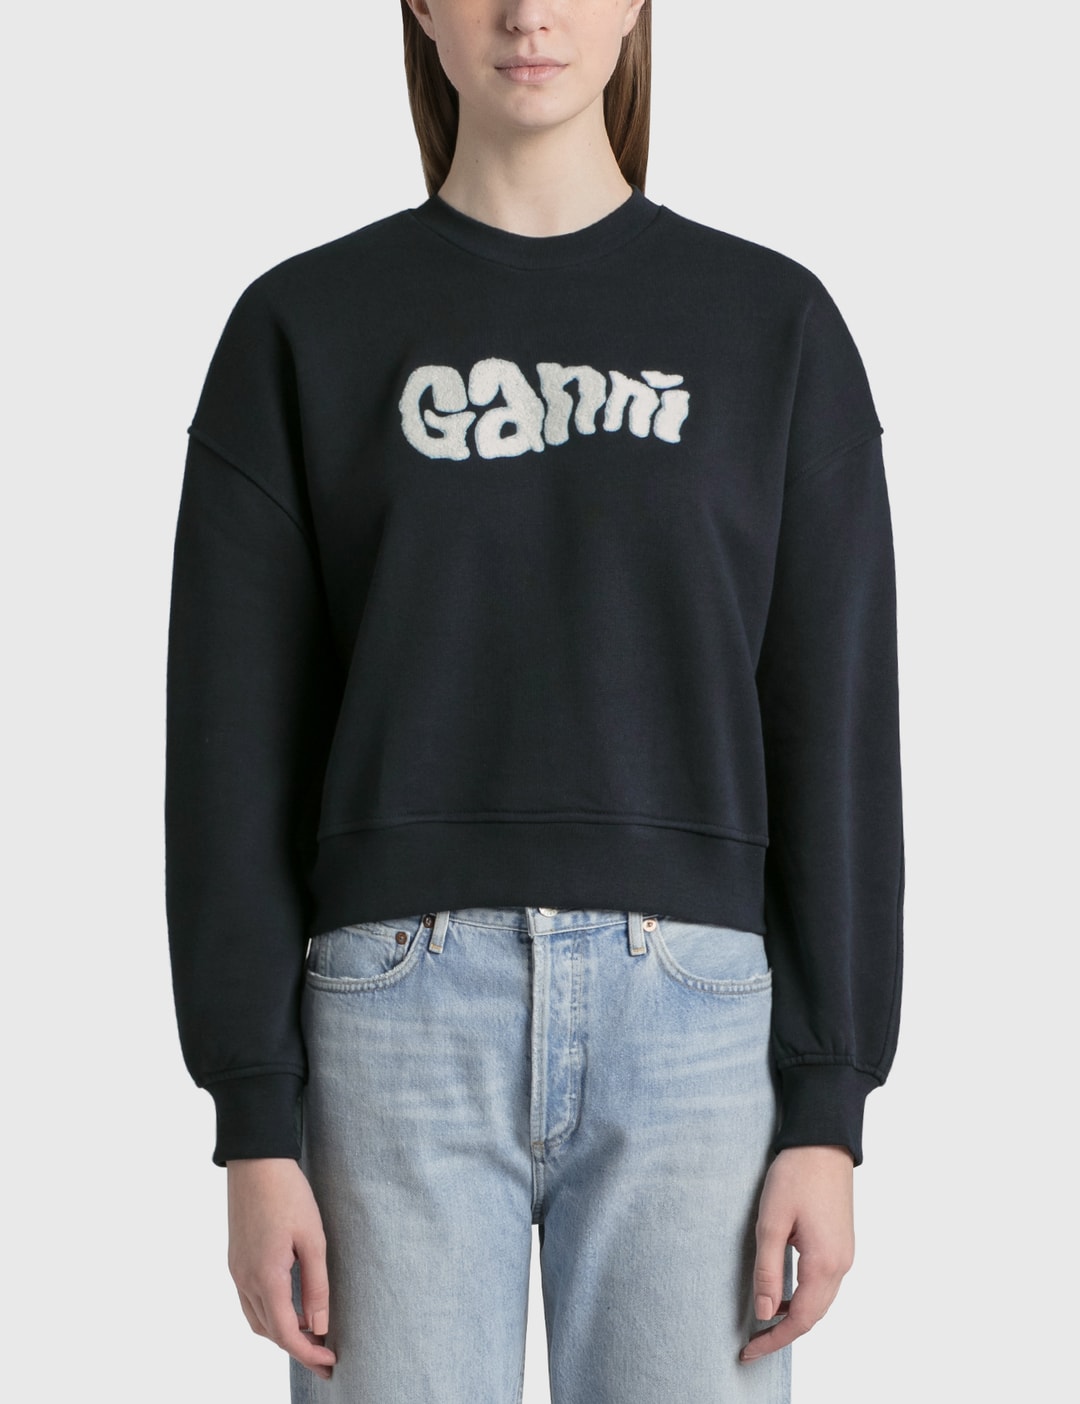 Ganni - Isoli Logo Sweatshirt | HBX - Globally Curated Fashion and ...